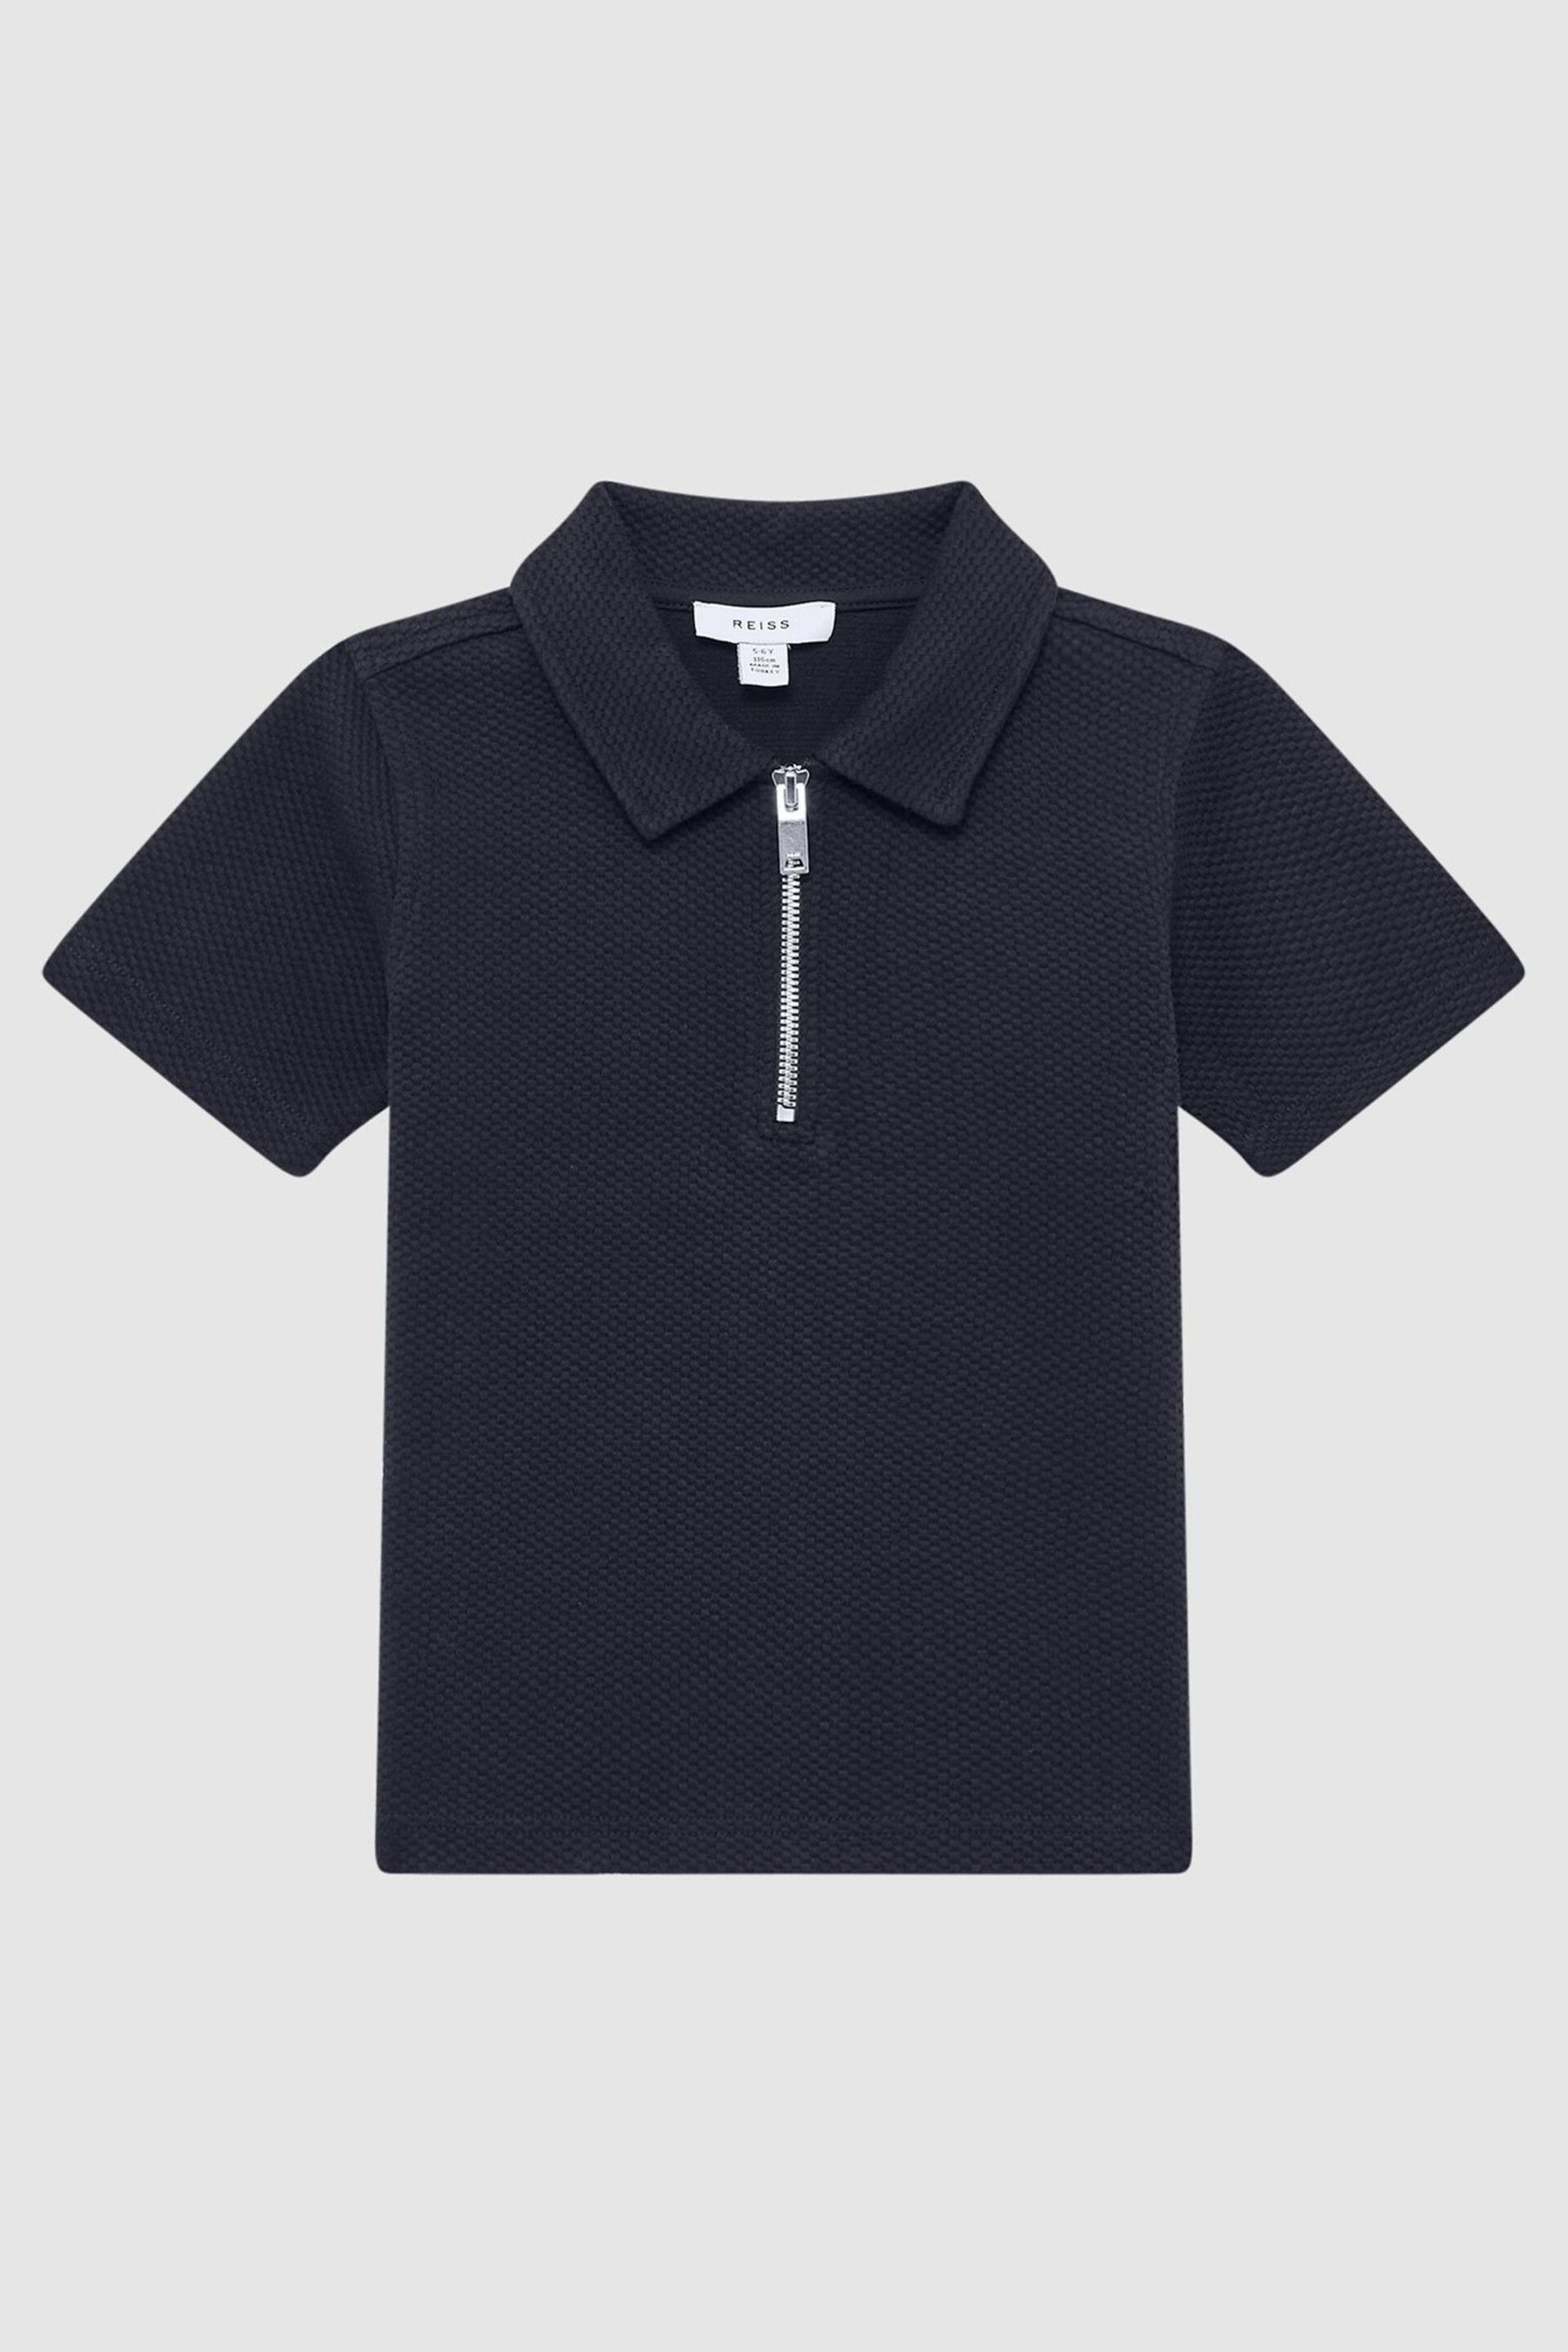 Reiss Navy Creed Junior Textured Half-Zip Polo Shirt - Image 2 of 6